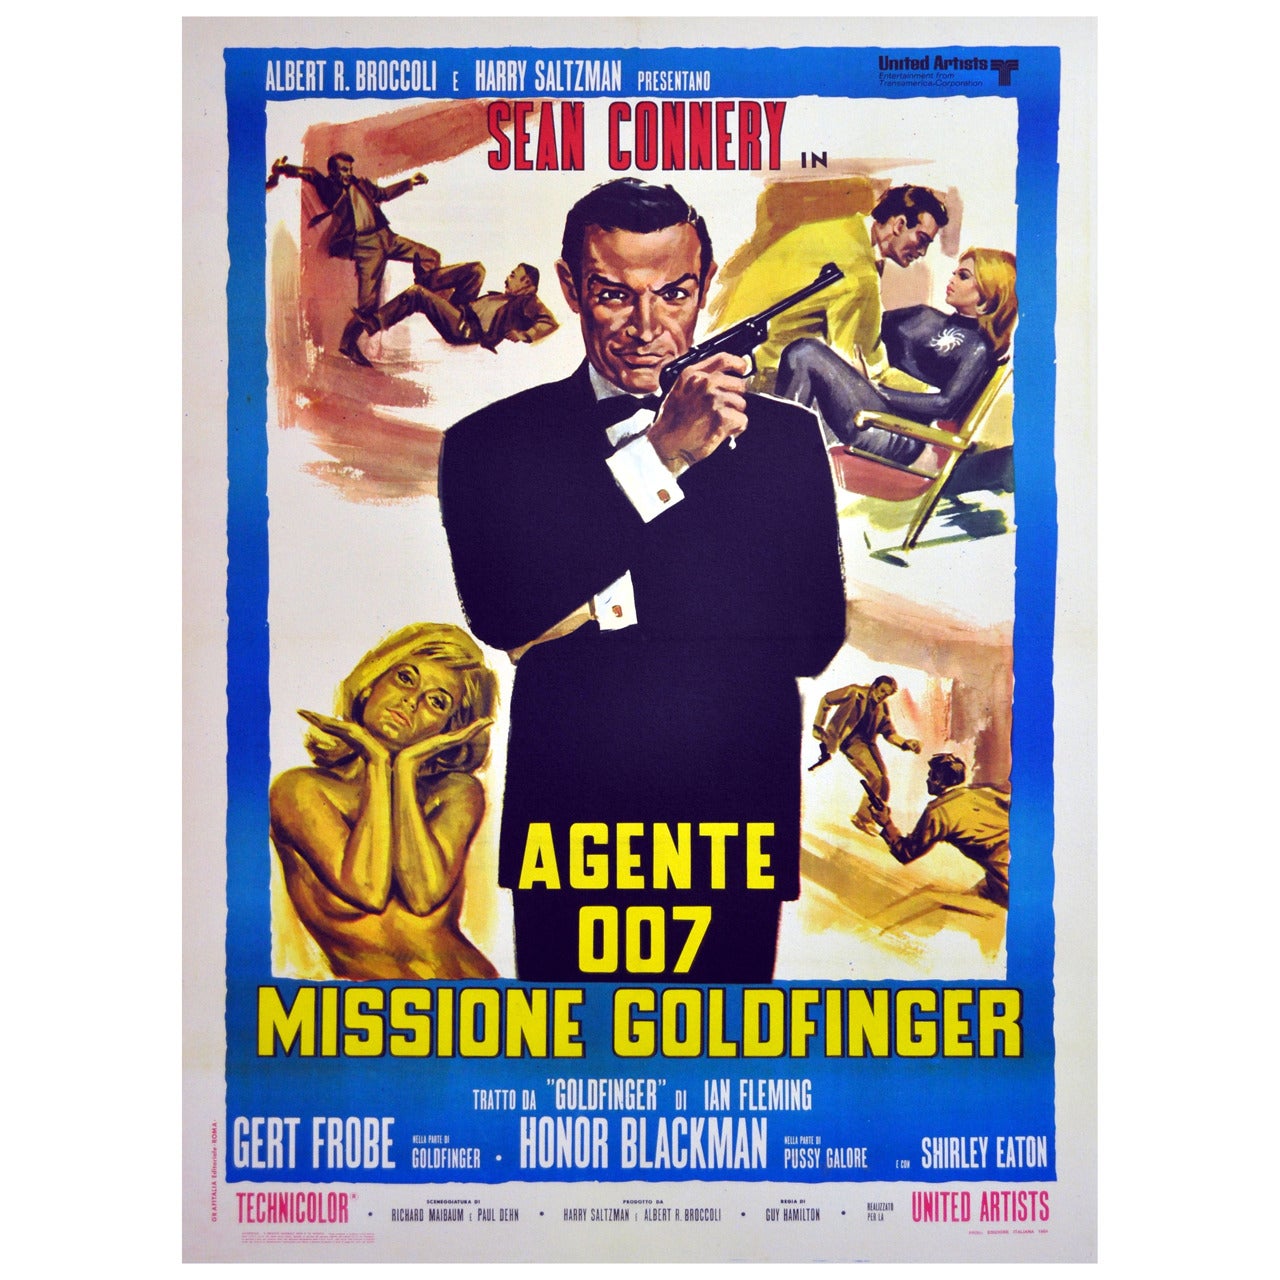 Original Vintage 007 James Bond Movie Poster, Goldfinger, Starring Sean Connery